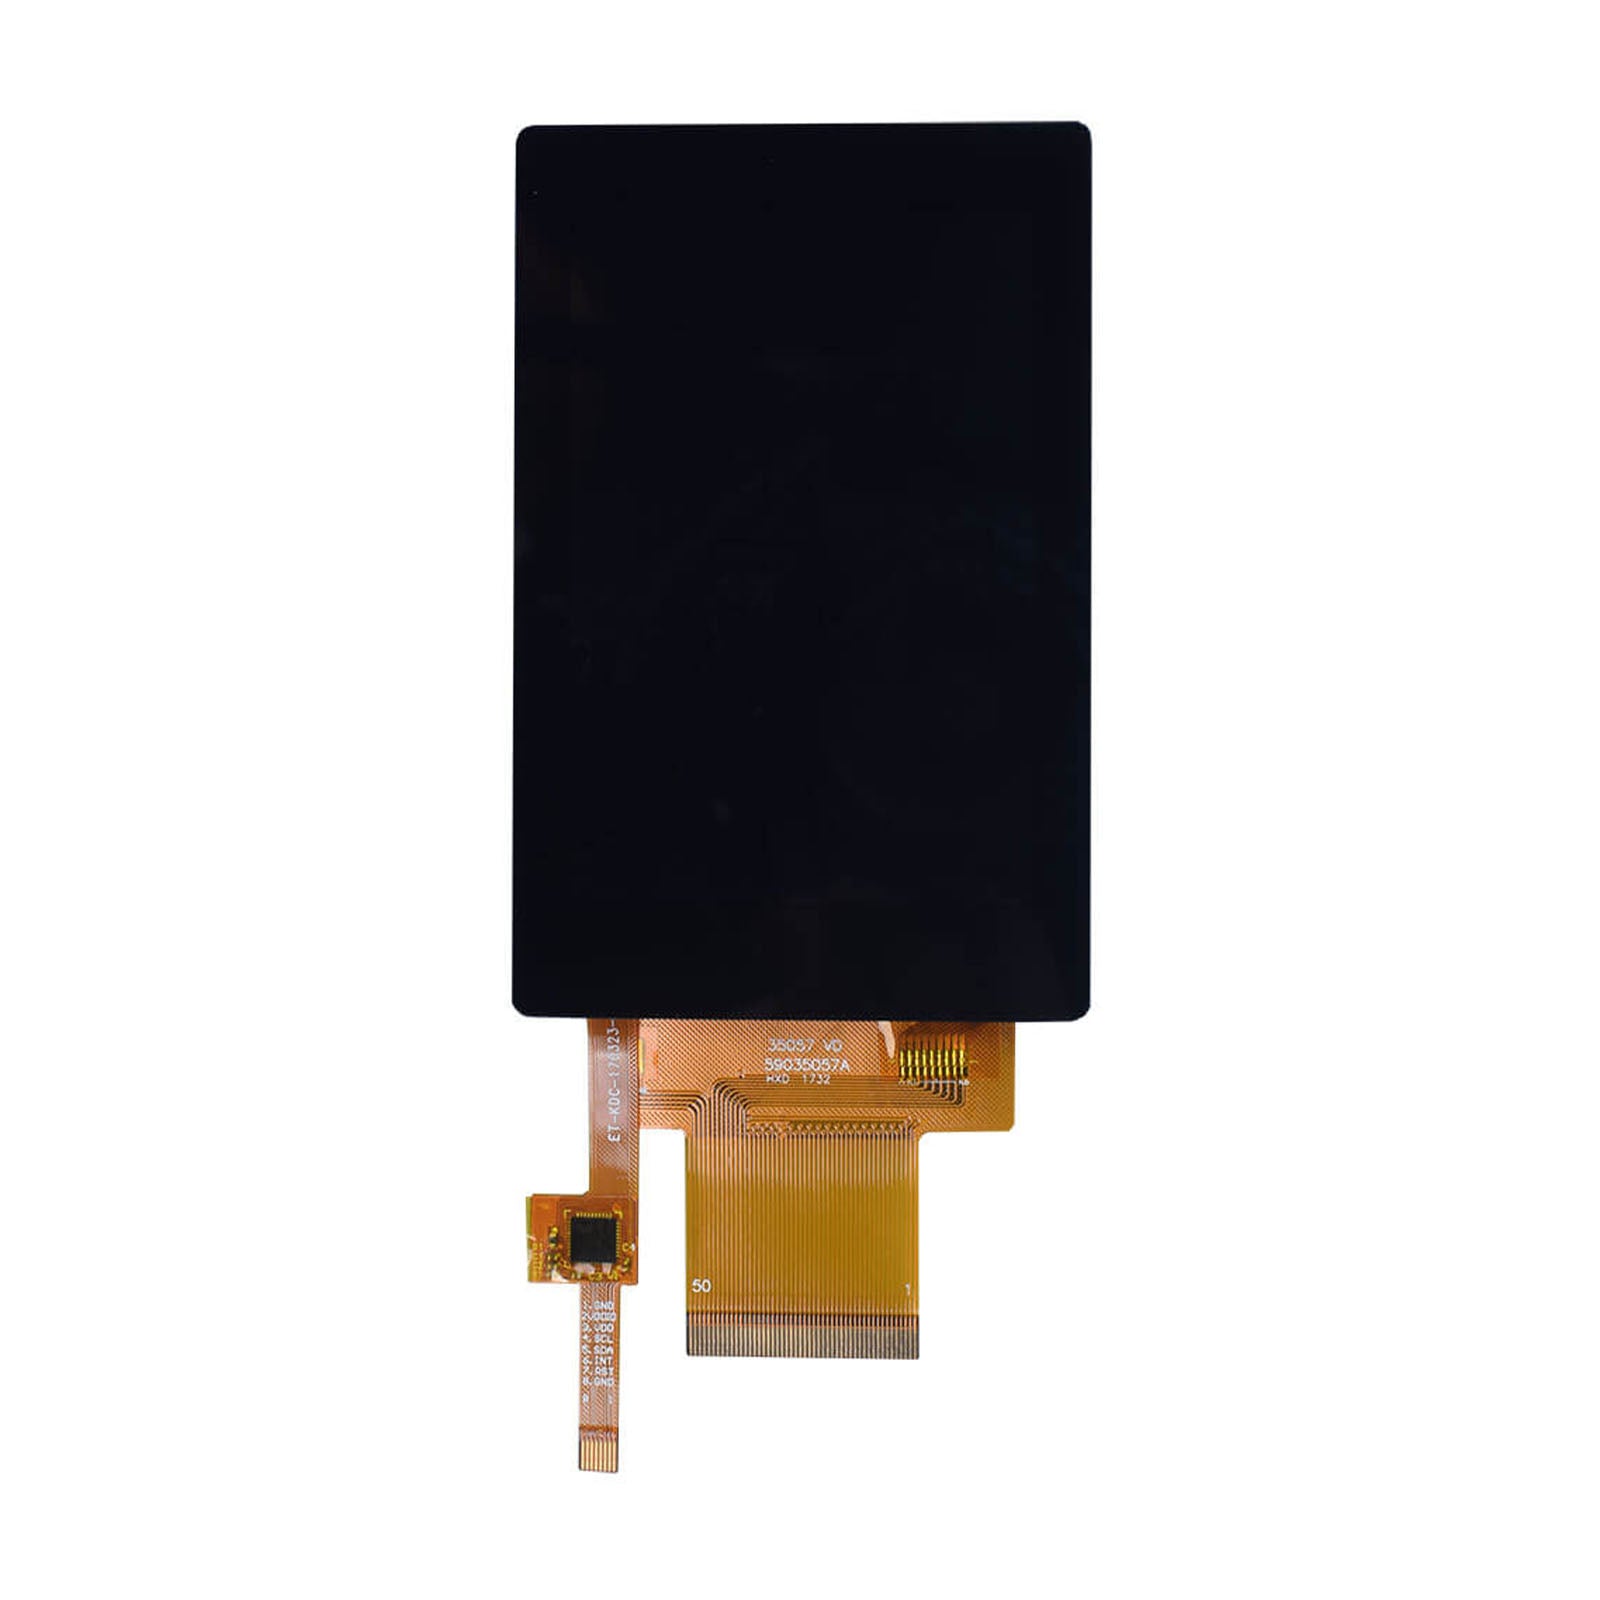 DisplayModule 3.5" IPS 320x480 Display Panel w/o Capacitive Touch - SPI, MCU, RGB